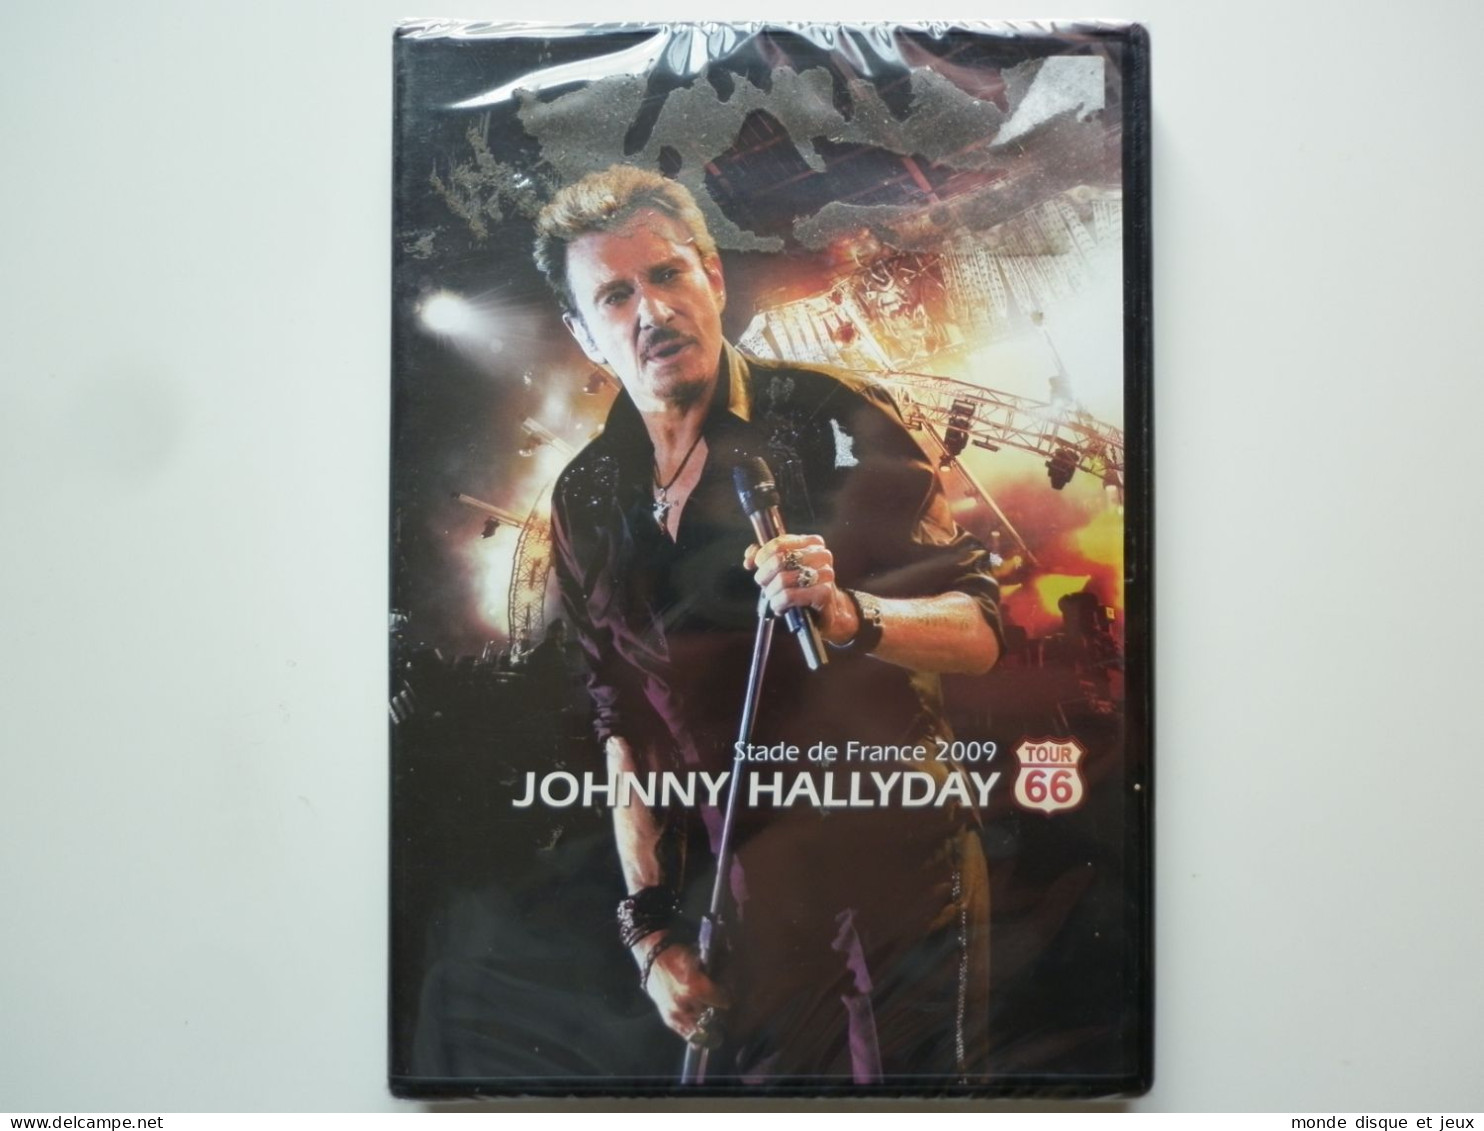 Johnny Hallyday Dvd Stade De France 2009 Tour 66 - Music On DVD